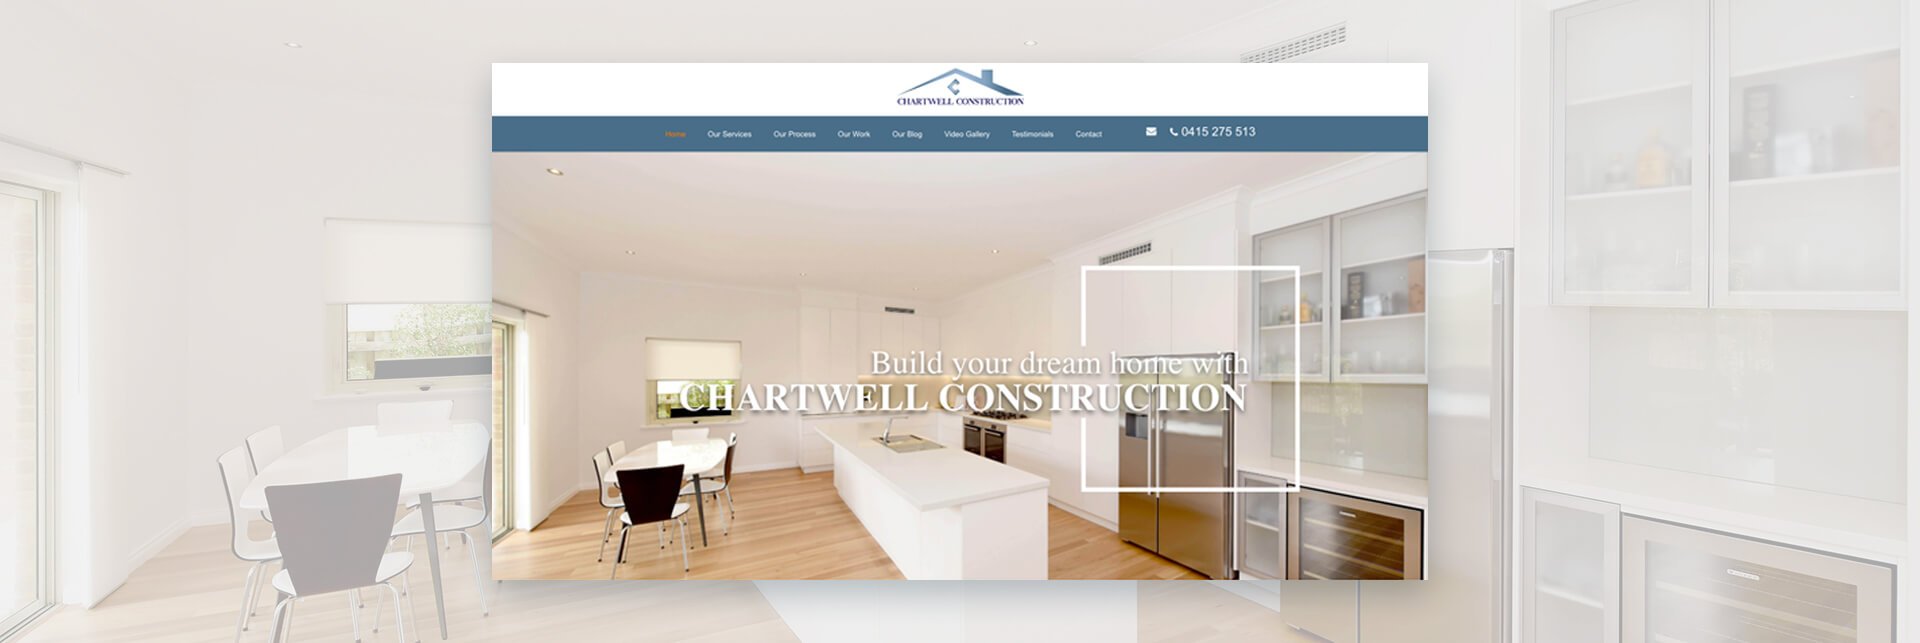 chartwell construction website mockup